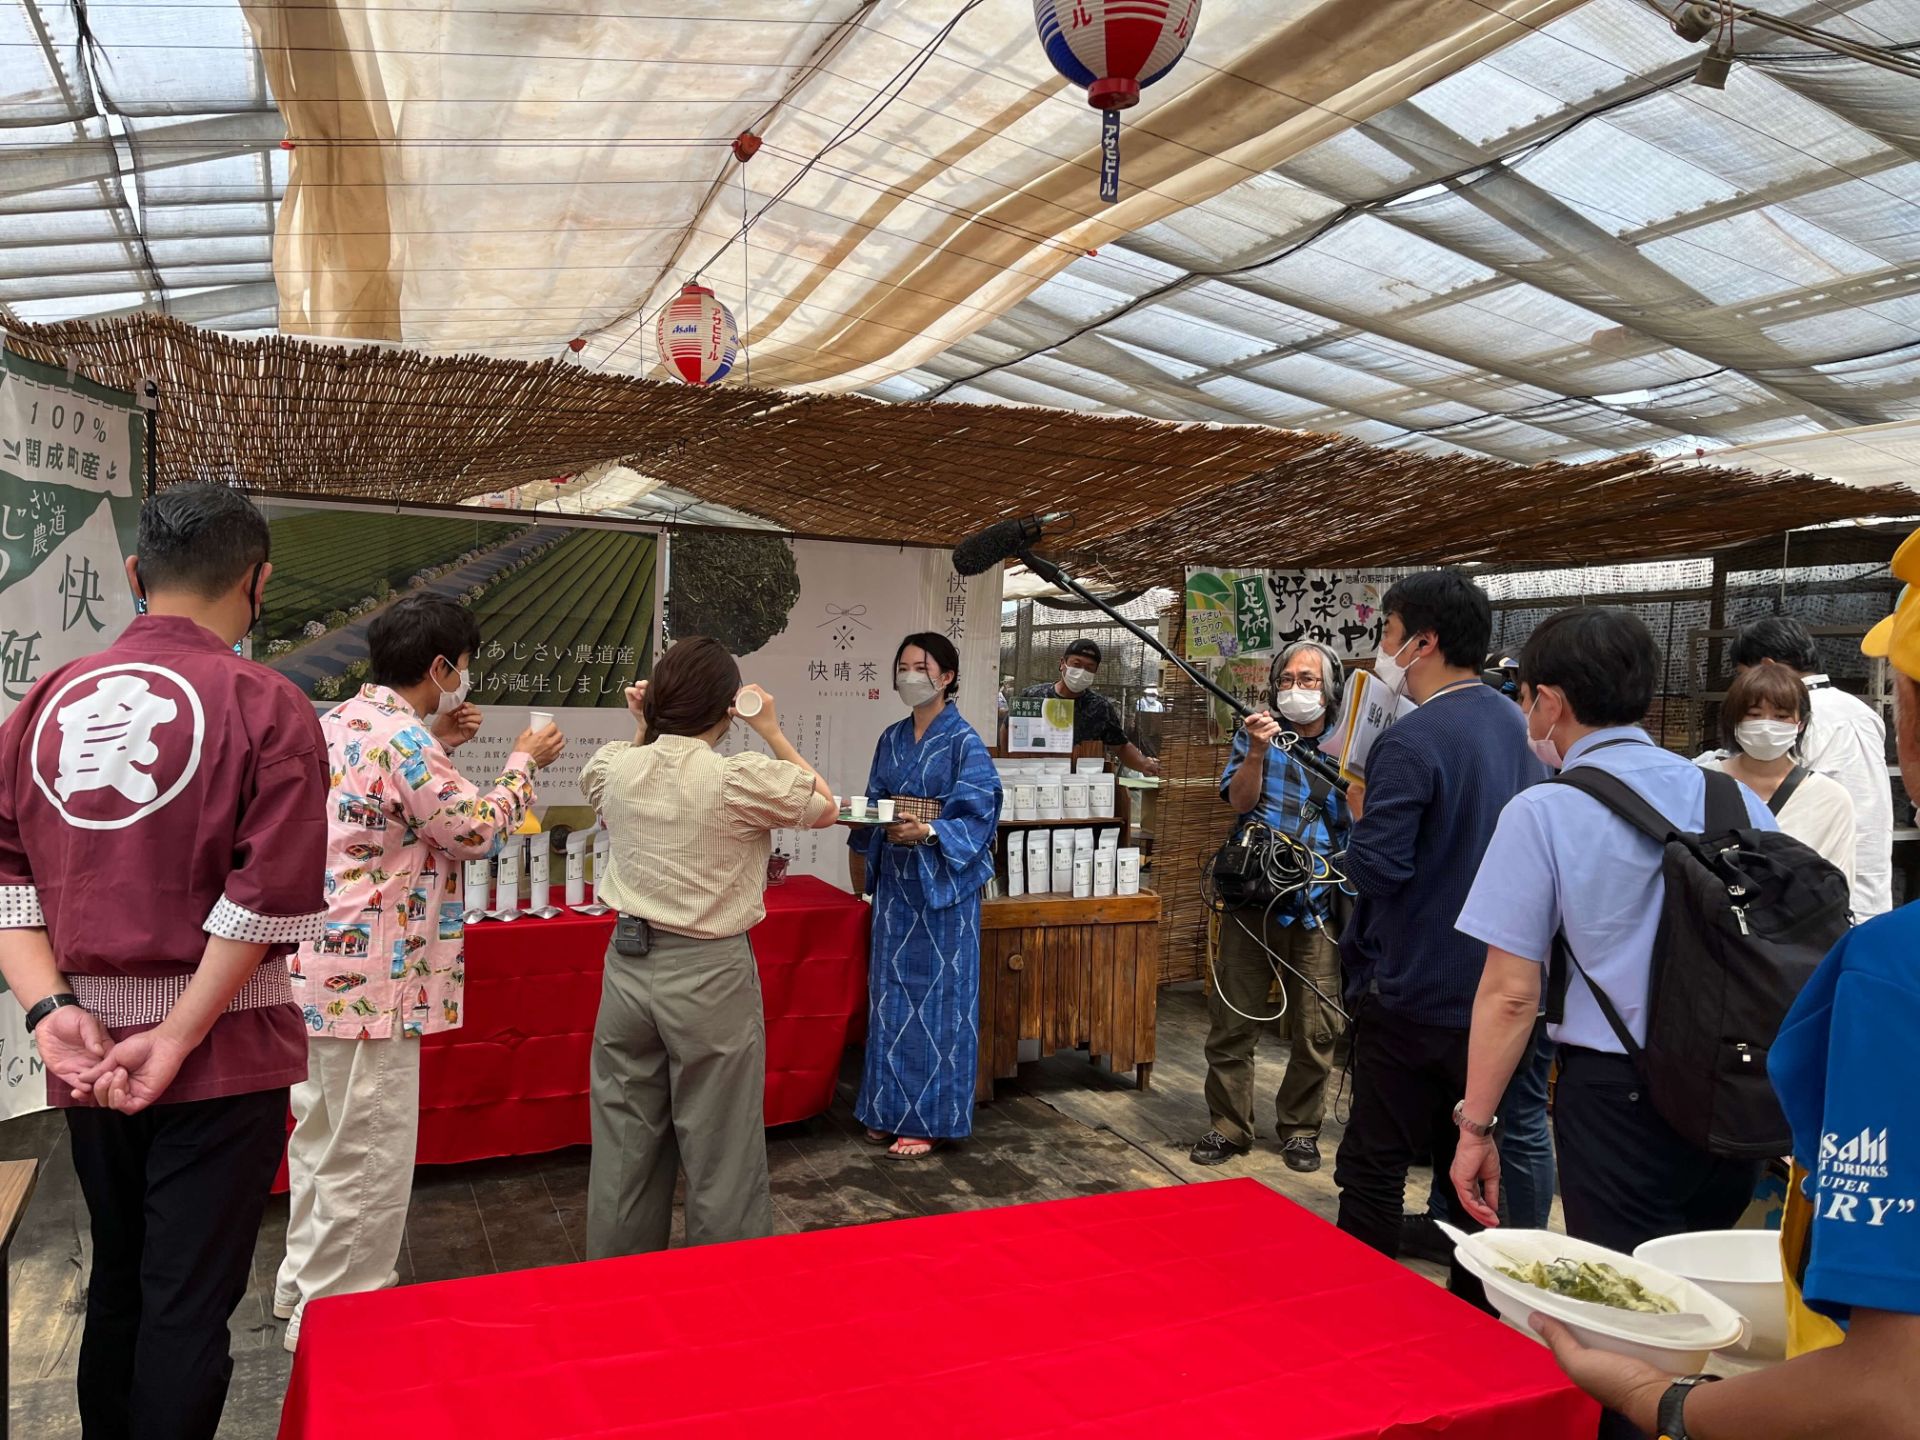 tvk「あっぱれKANAGAWA大行進」にて開成町新ブランド茶葉「快晴茶」が紹介されました。